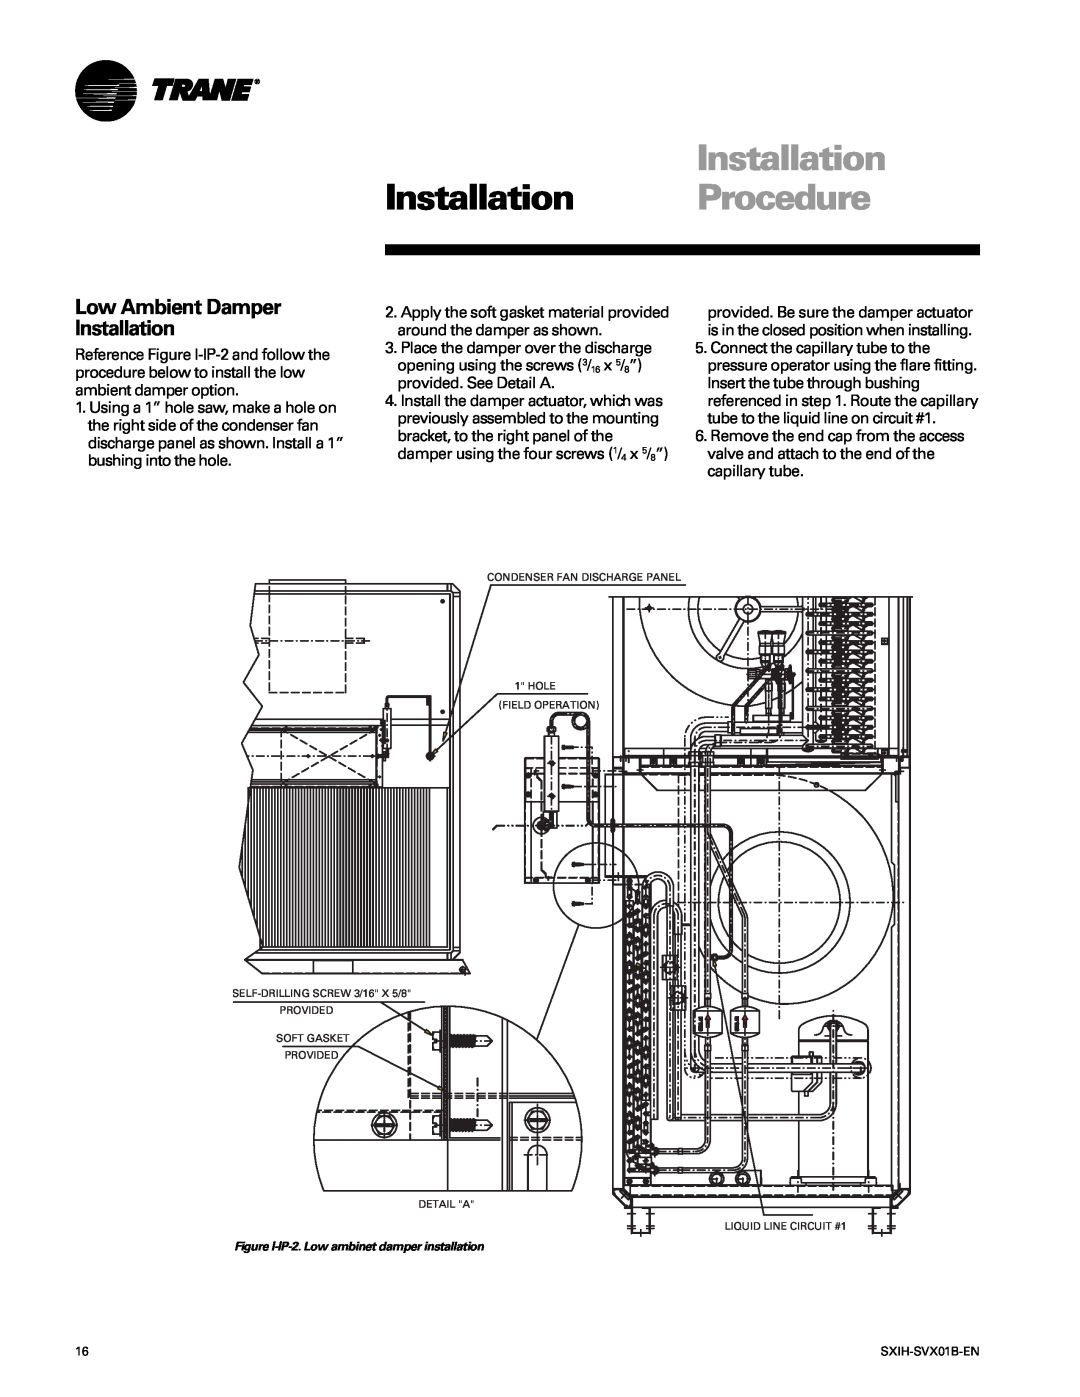 Trane SCIH manual Low Ambient Damper Installation, Installation Procedure, Figure I-IP-2.Low ambinet damper installation 